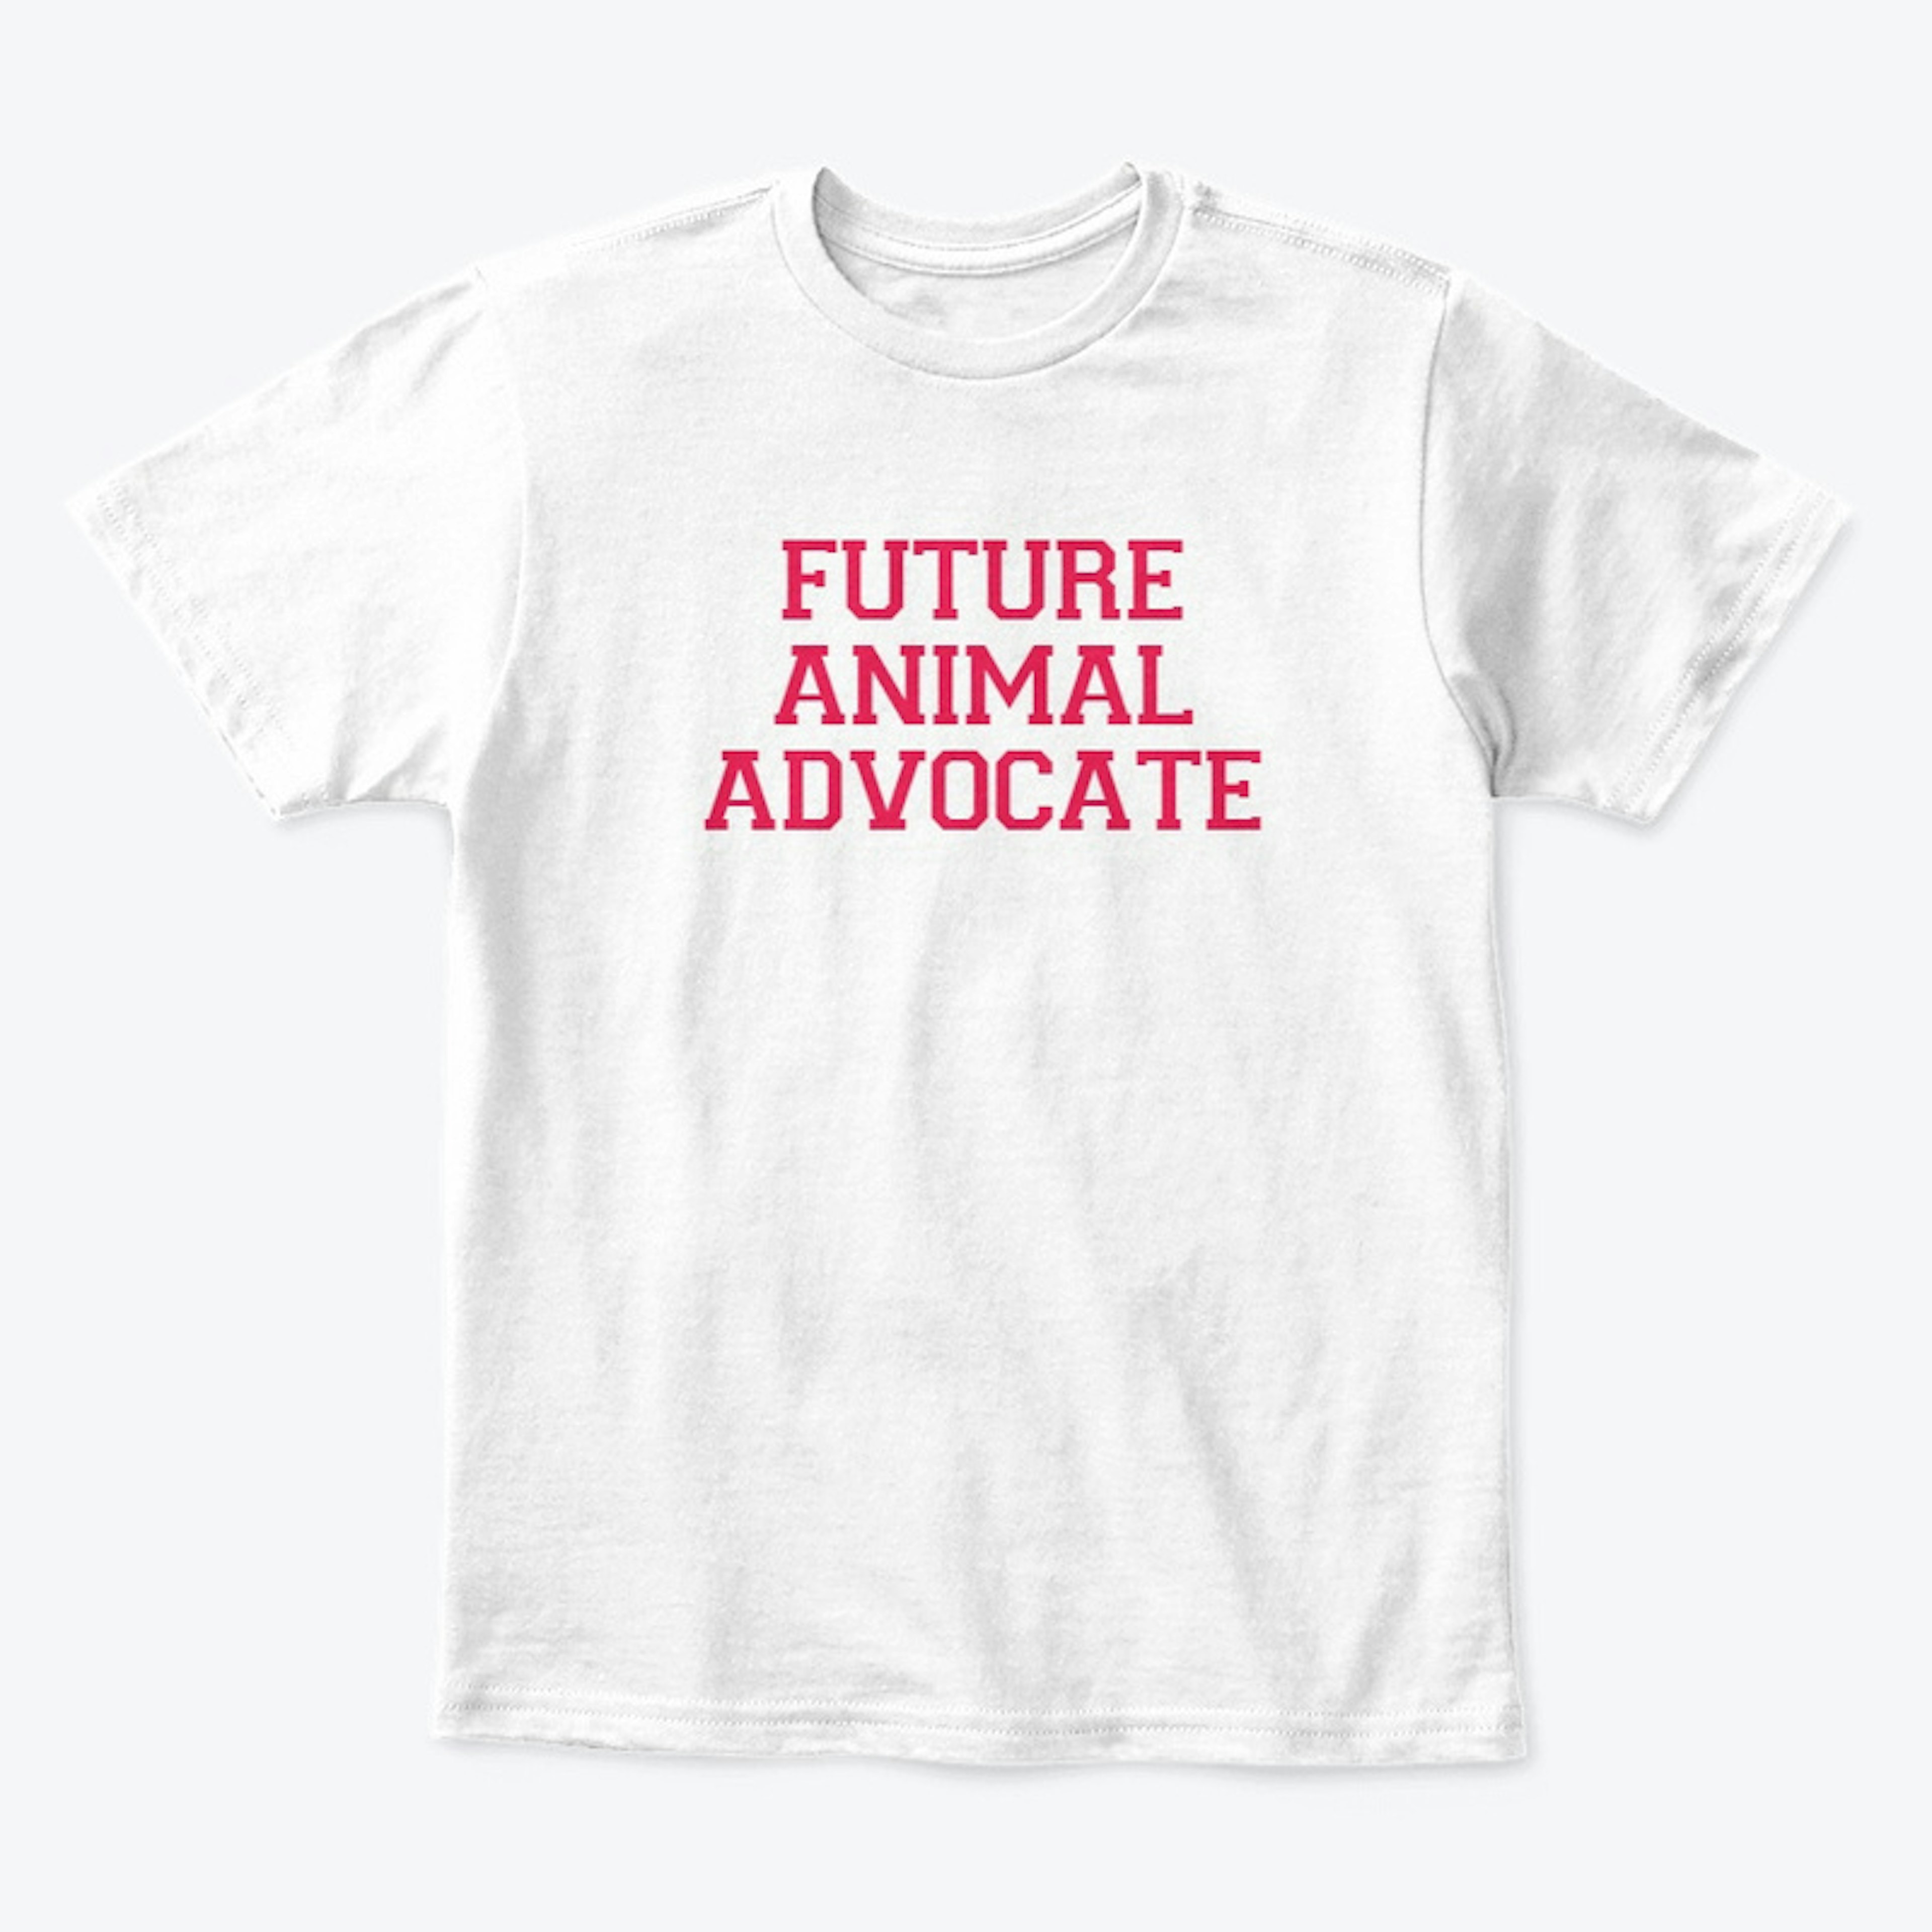 Future Animal Advocate! 